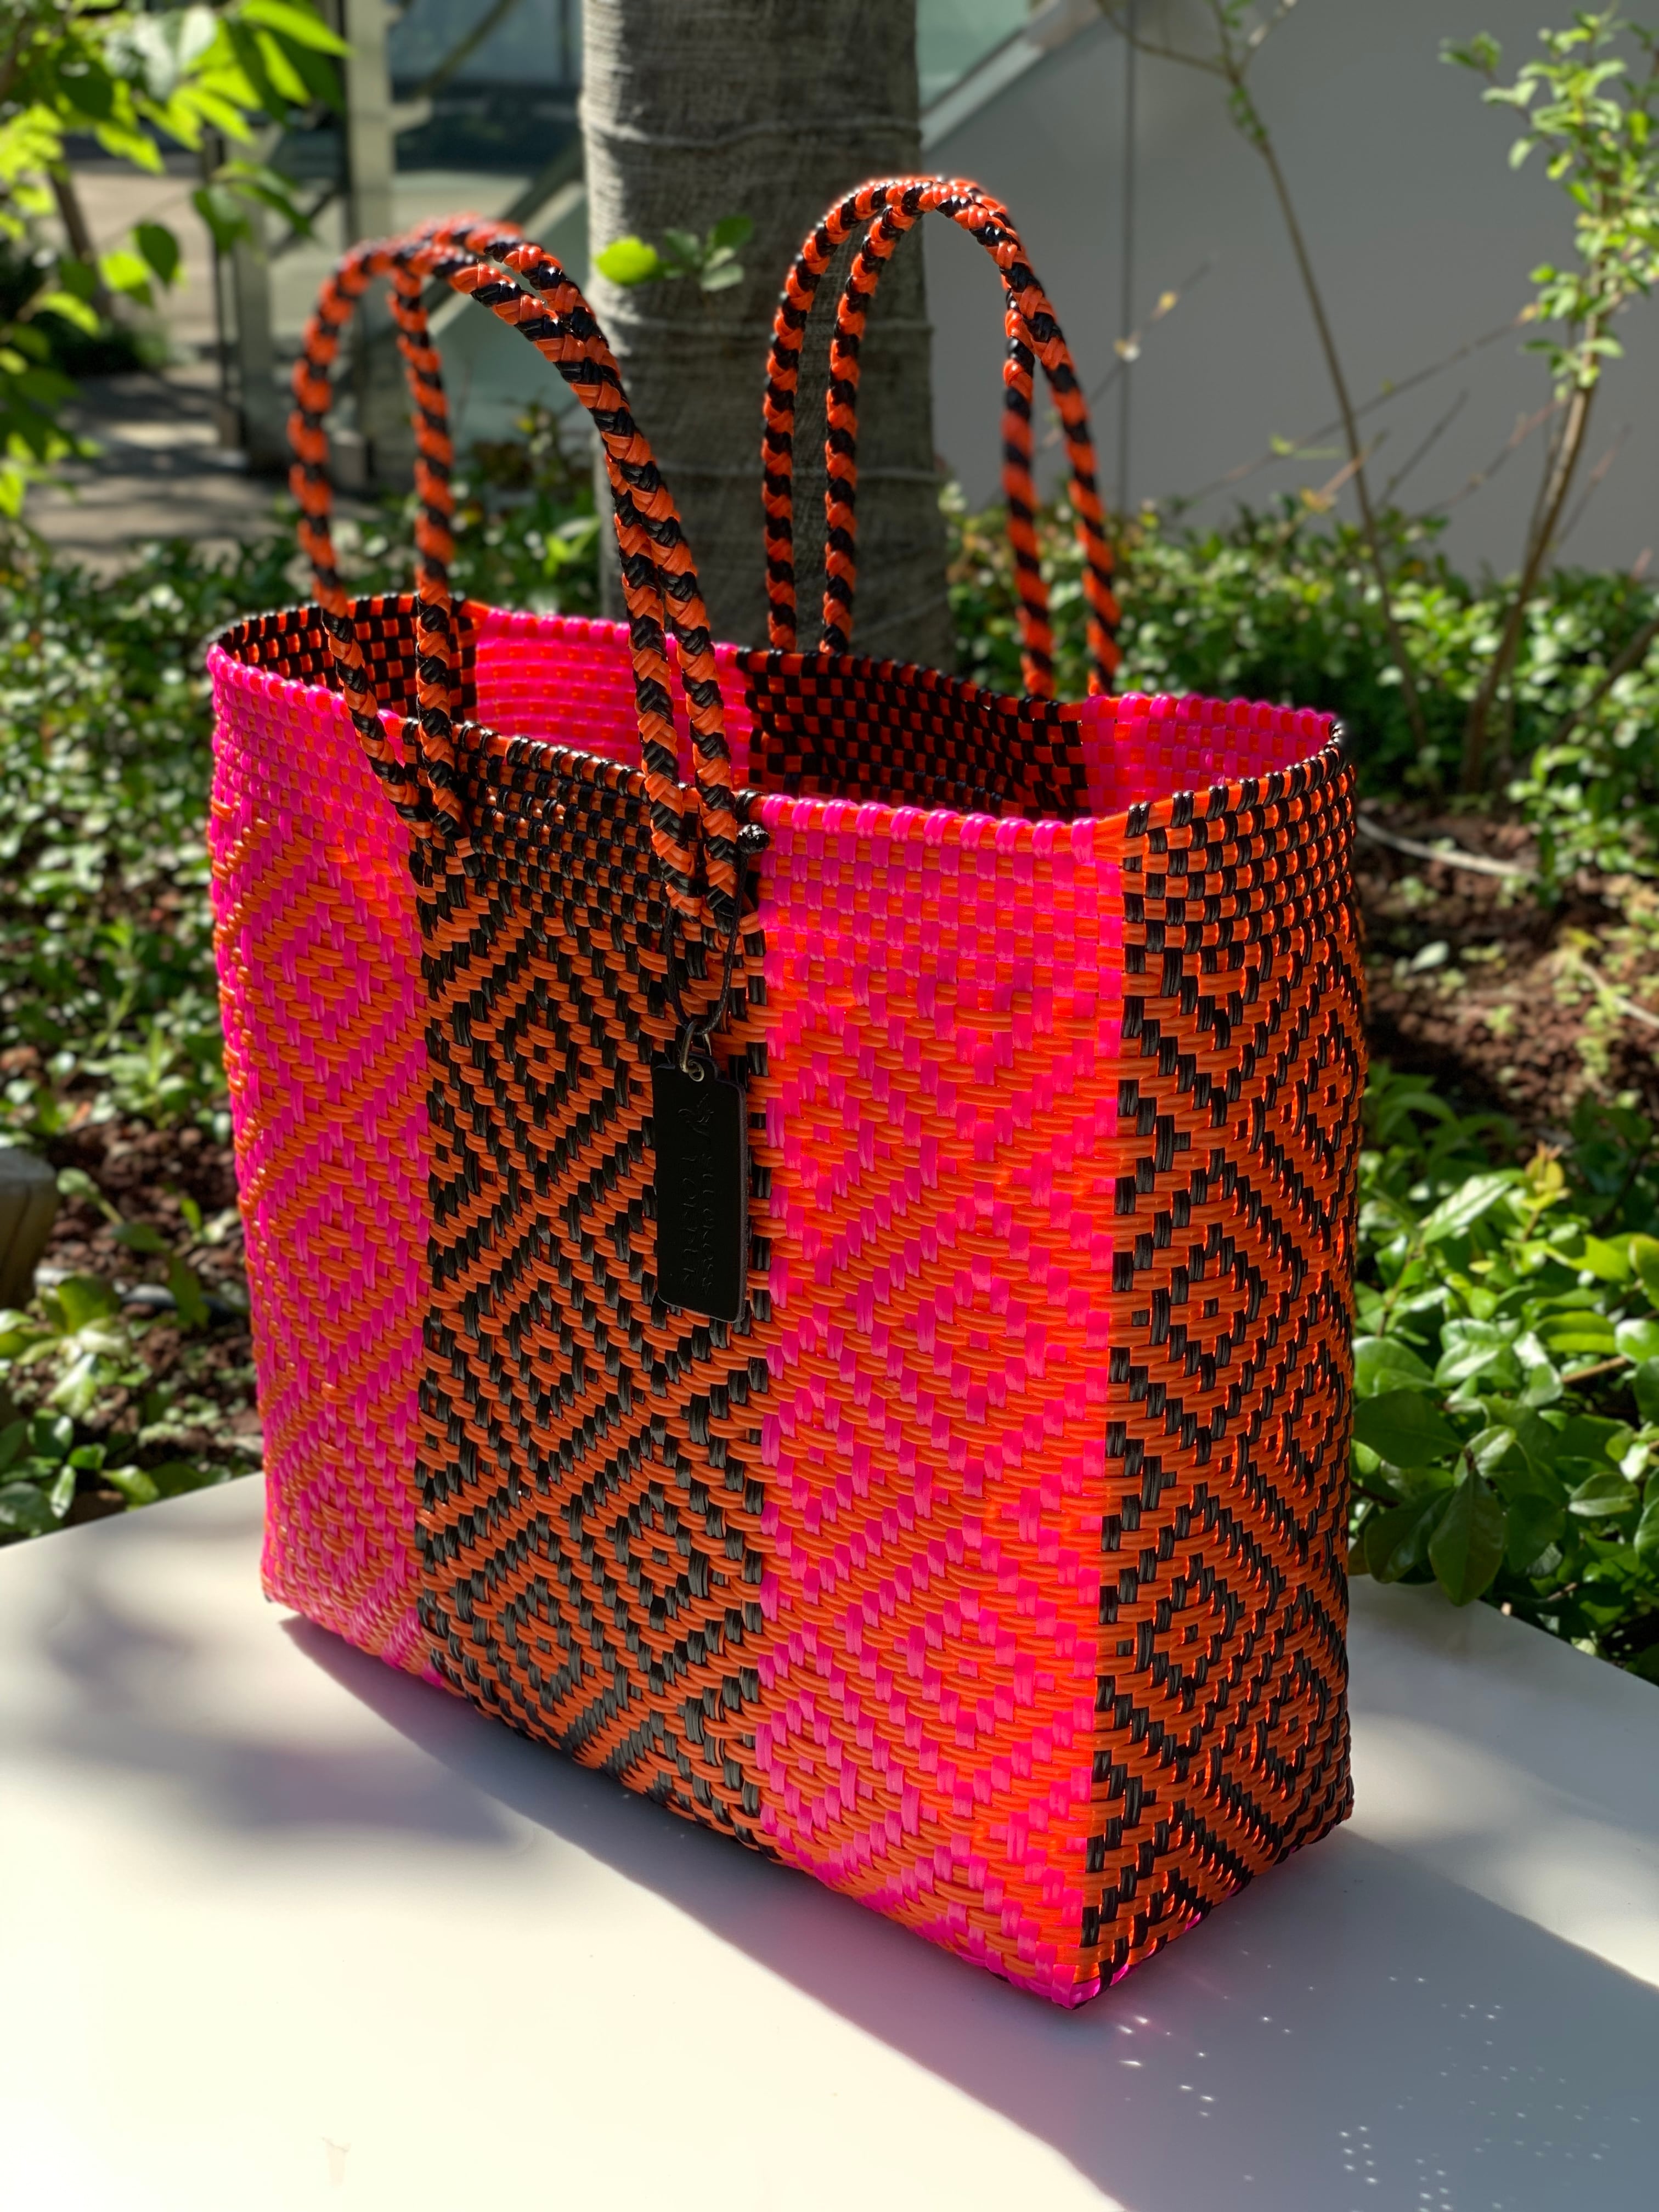 S Mercado Bag (Normal handle) Pink/Black/Orange | SEE CROSS BORDER  人気のおしゃれメルカドバッグ/職人が作ったハンドメイド品 powered by BASE